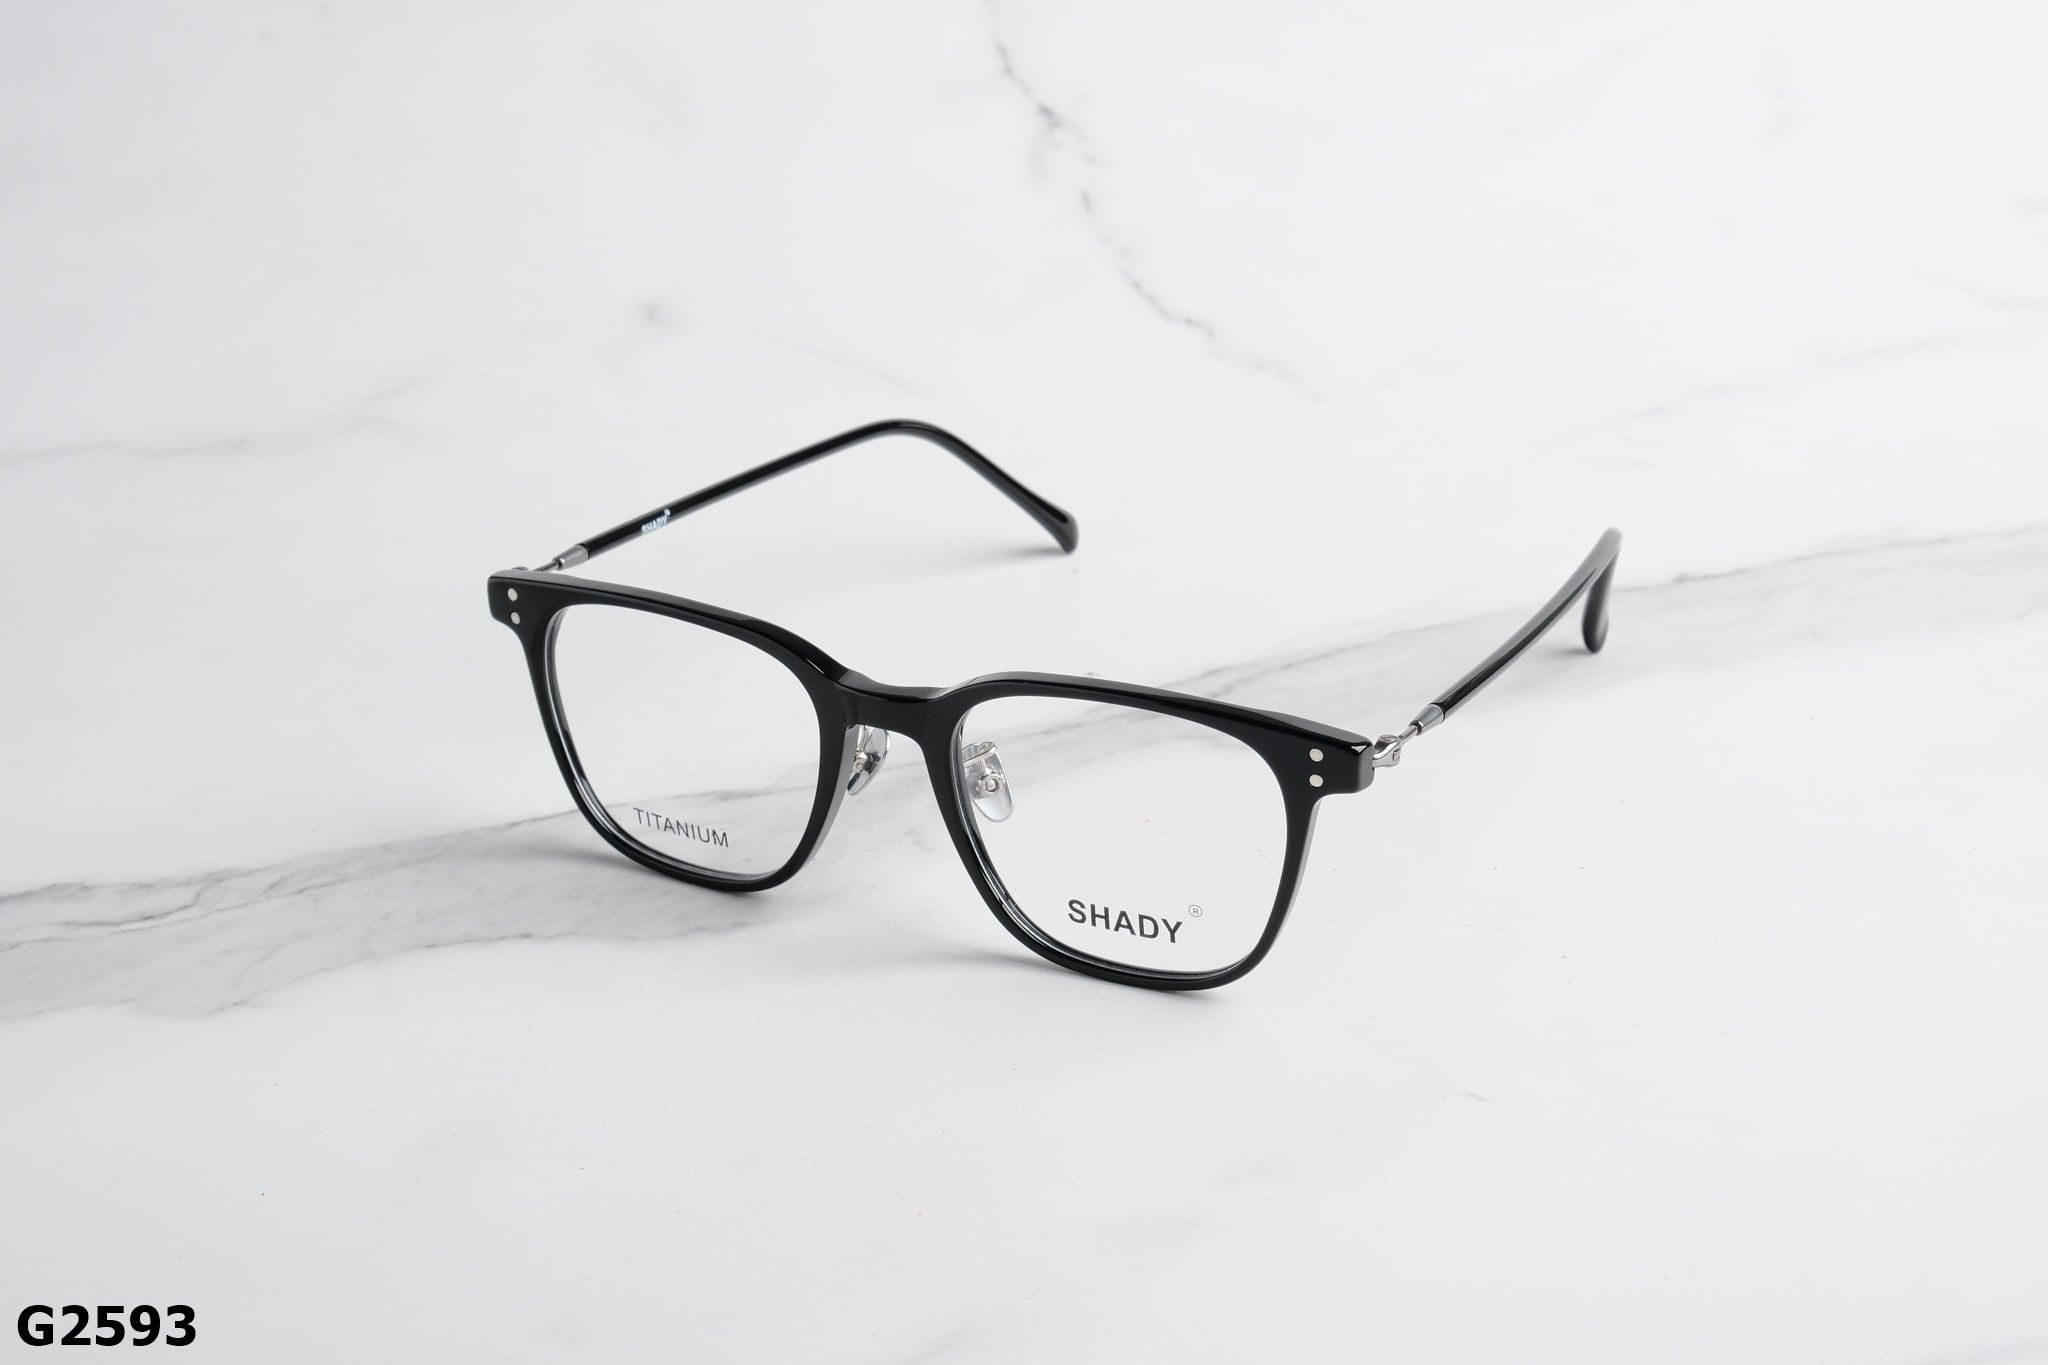  SHADY Eyewear - Glasses - G2593 